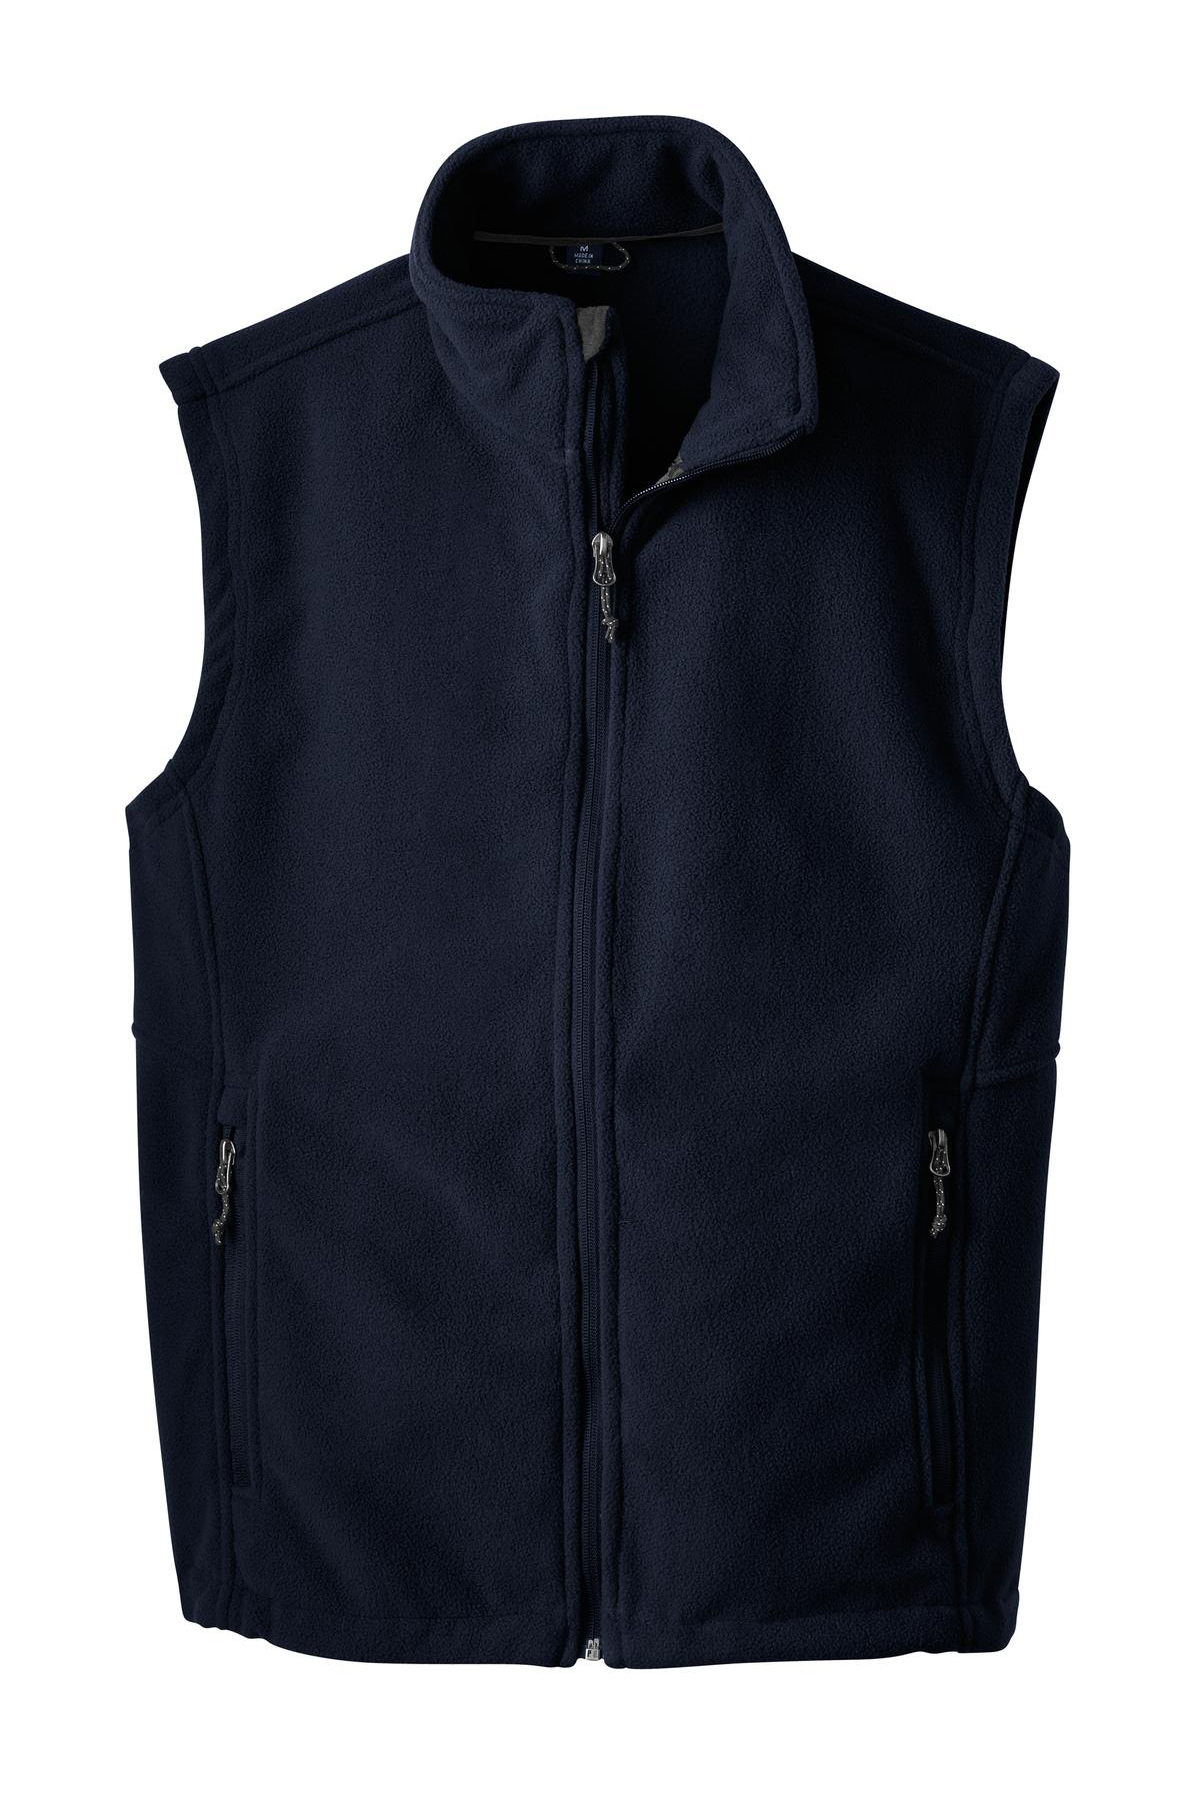 Size Chart for Port Authority F219 Value Fleece Vest 